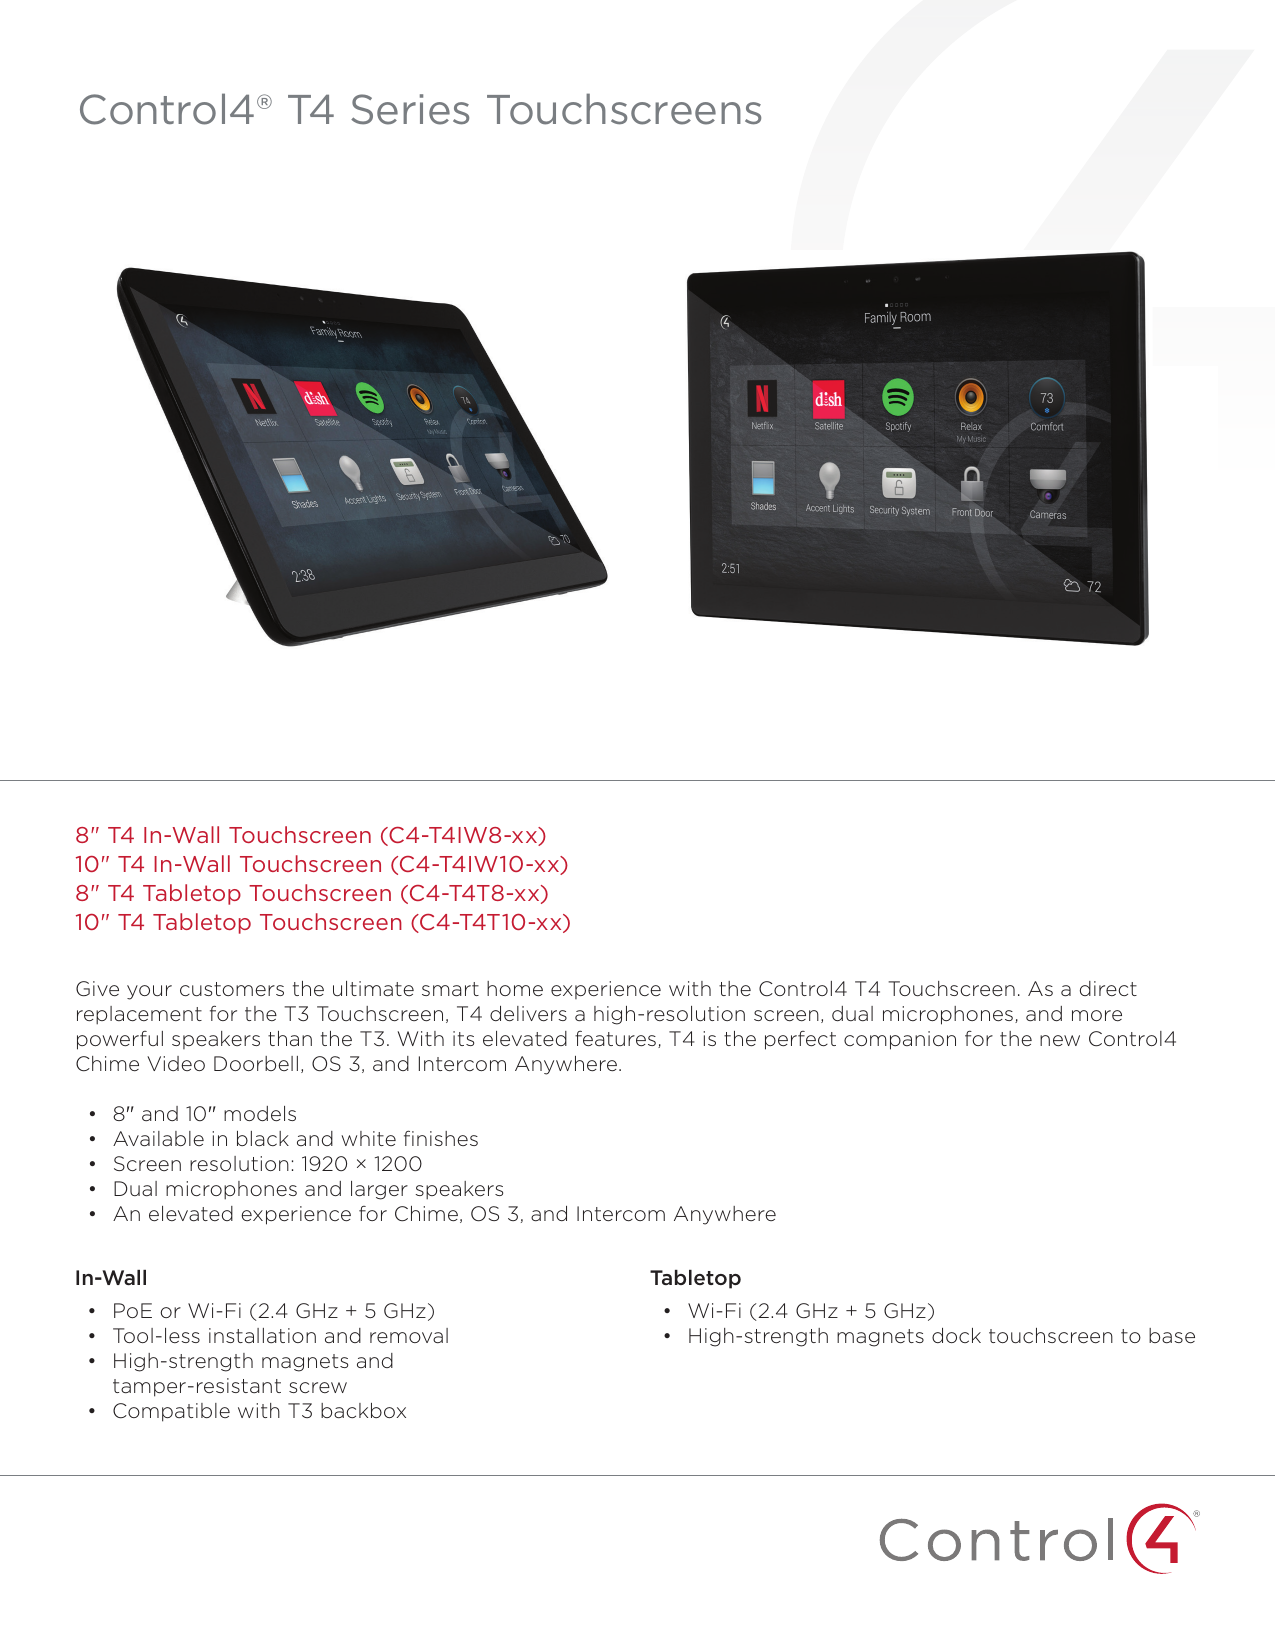 Control4 T4 Series Touchscreen Datasheet | Manualzz